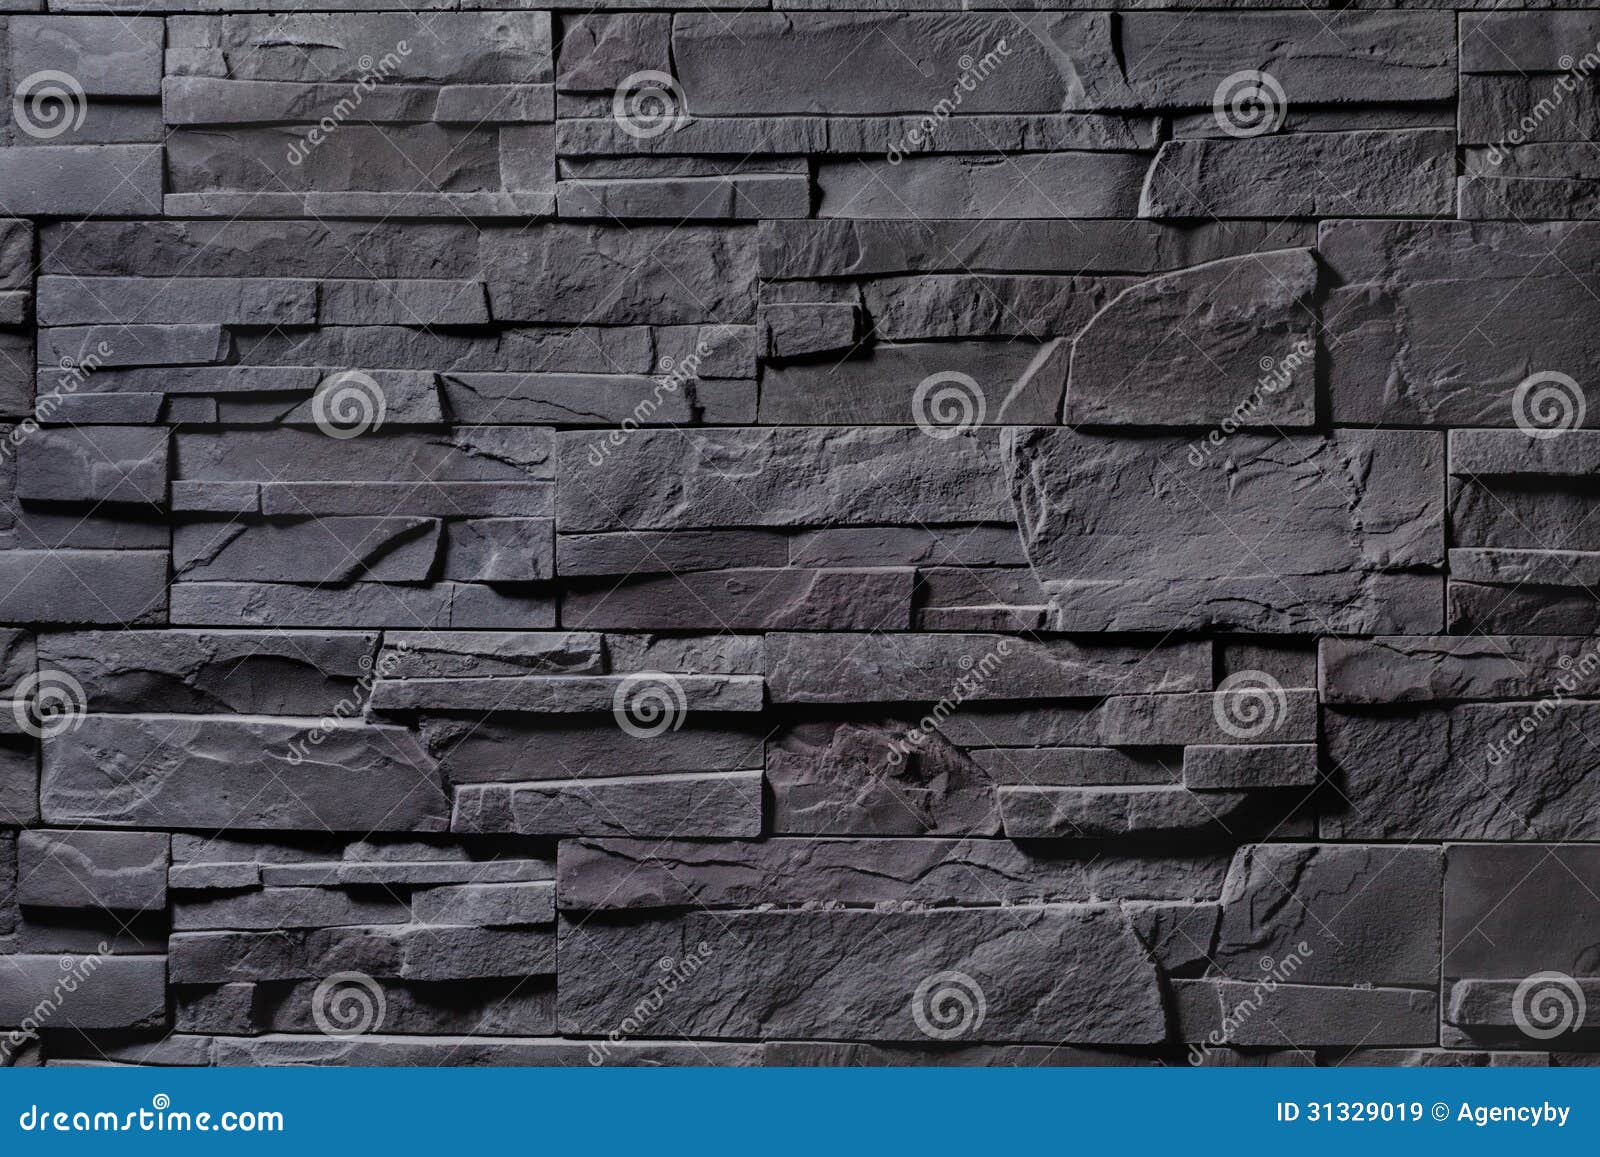 Panel de pared con textura de piedra falsa - ADD STONE